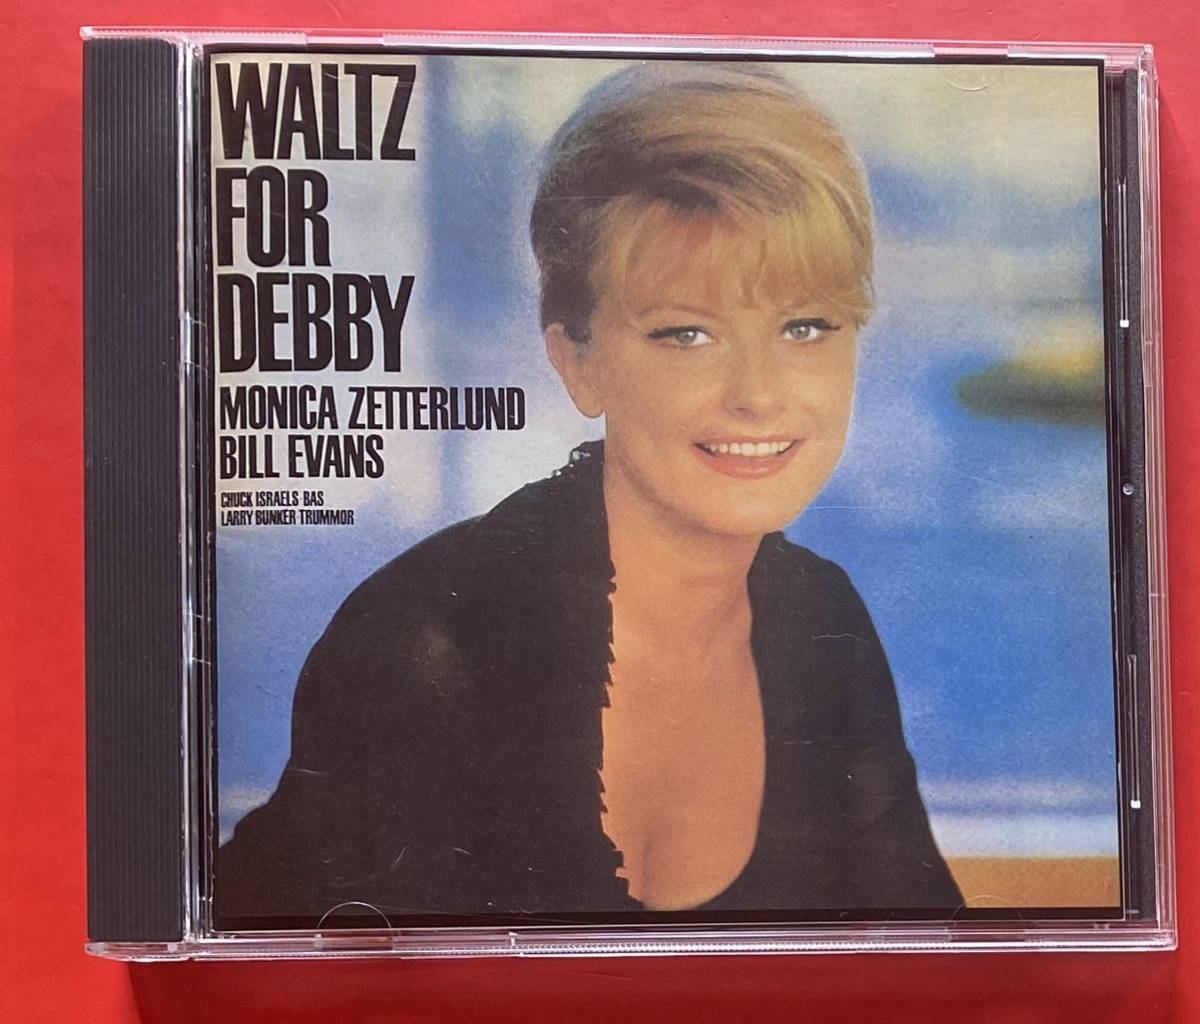 【CD】モニカ・ゼタールンド / ビル・エヴァンス「Waltz For Debby」Monica Zetterlund / Bill Evans 国内盤 盤面良好 [07230814]_画像1